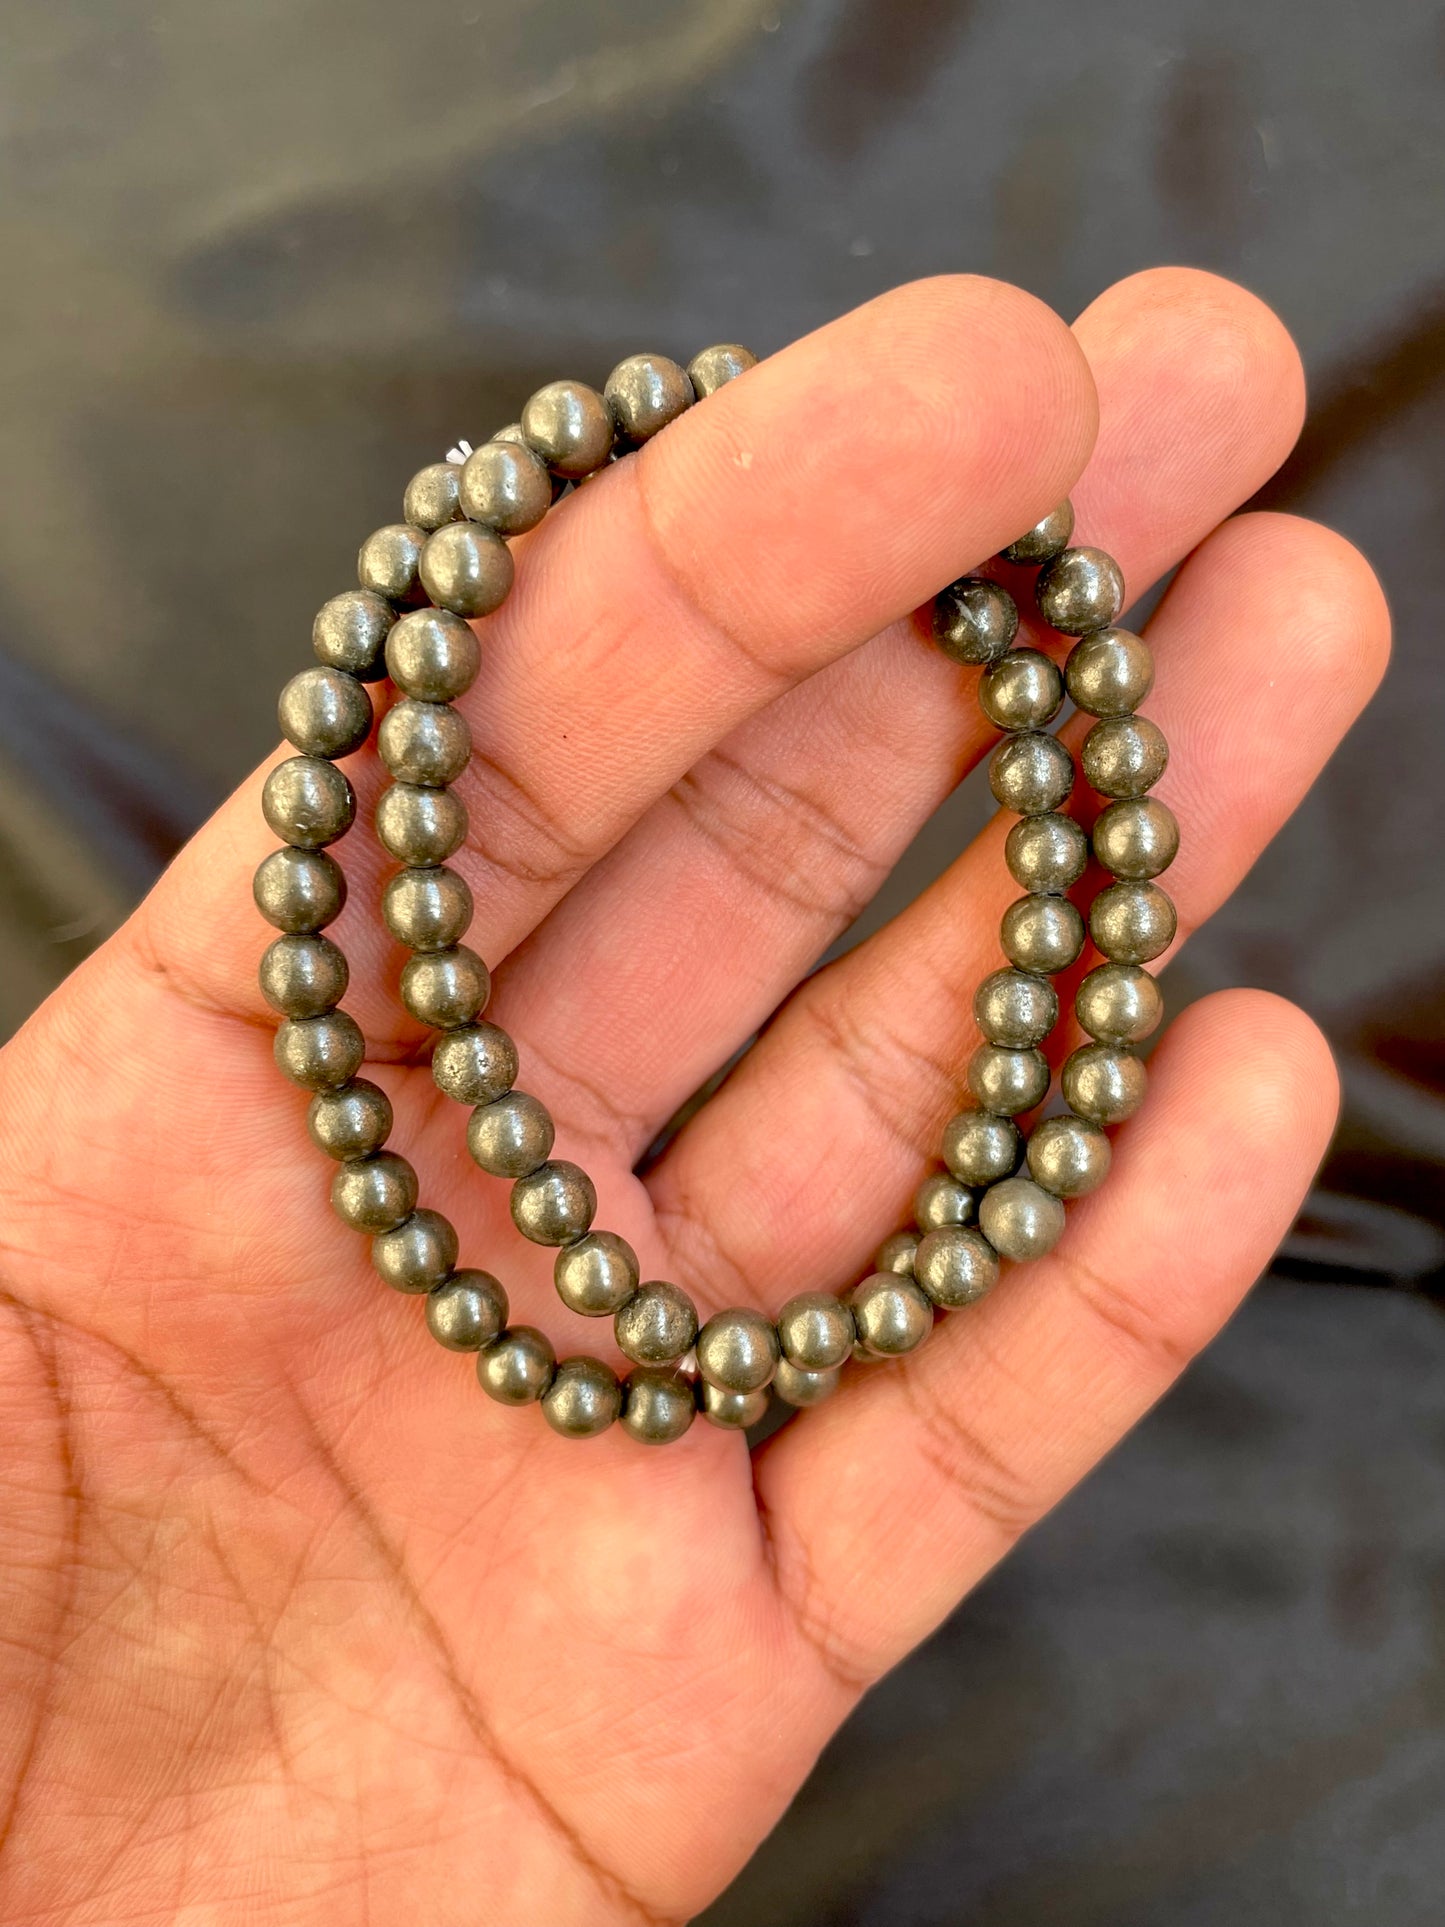 Pyrite Bracelet (6mm)